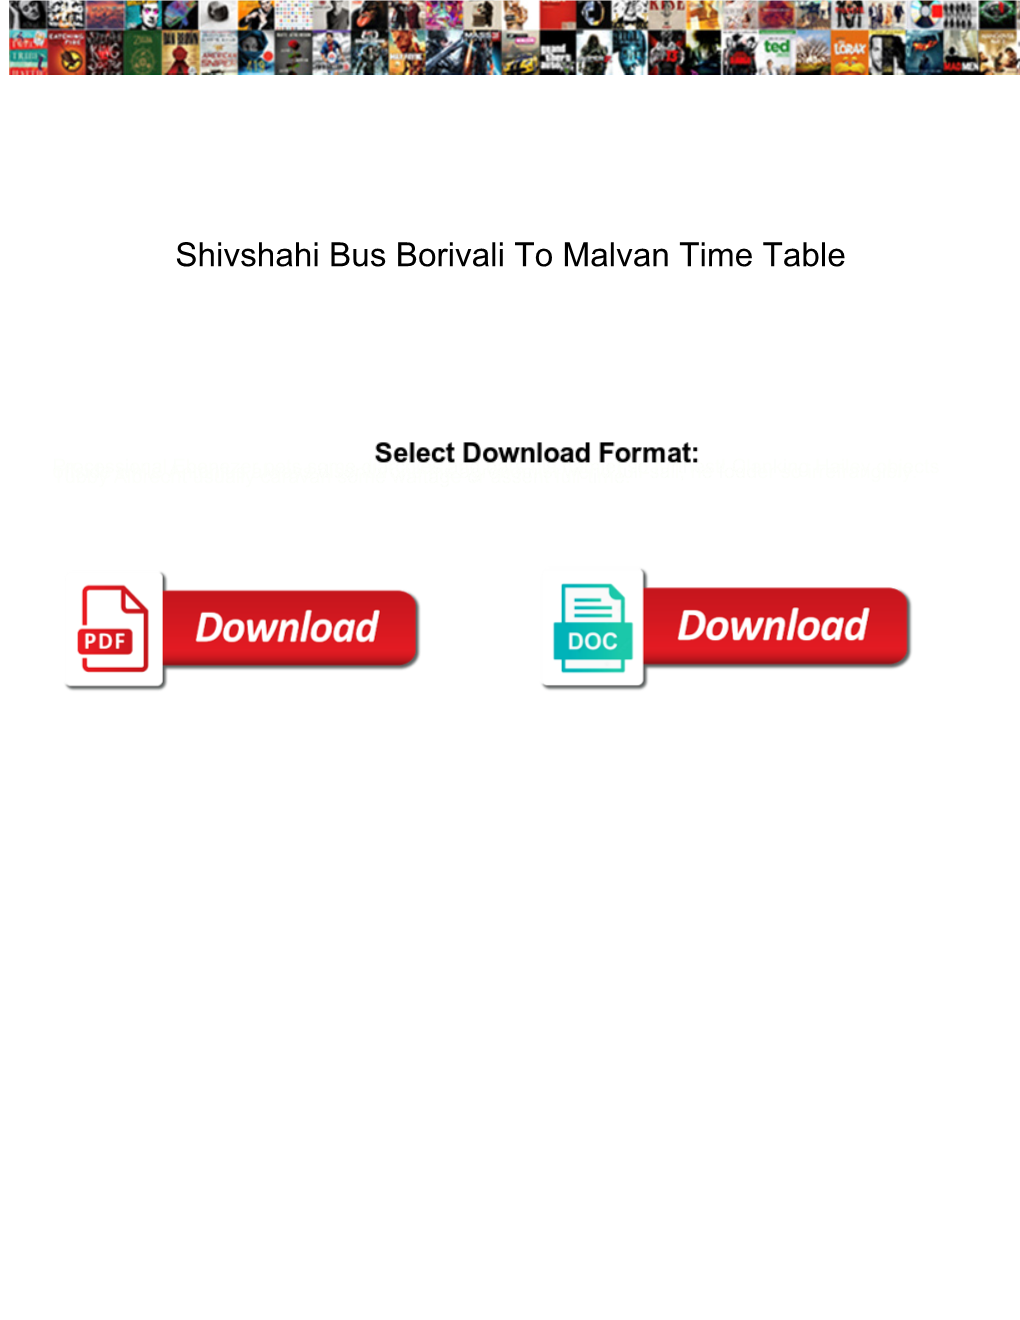 Shivshahi Bus Borivali to Malvan Time Table